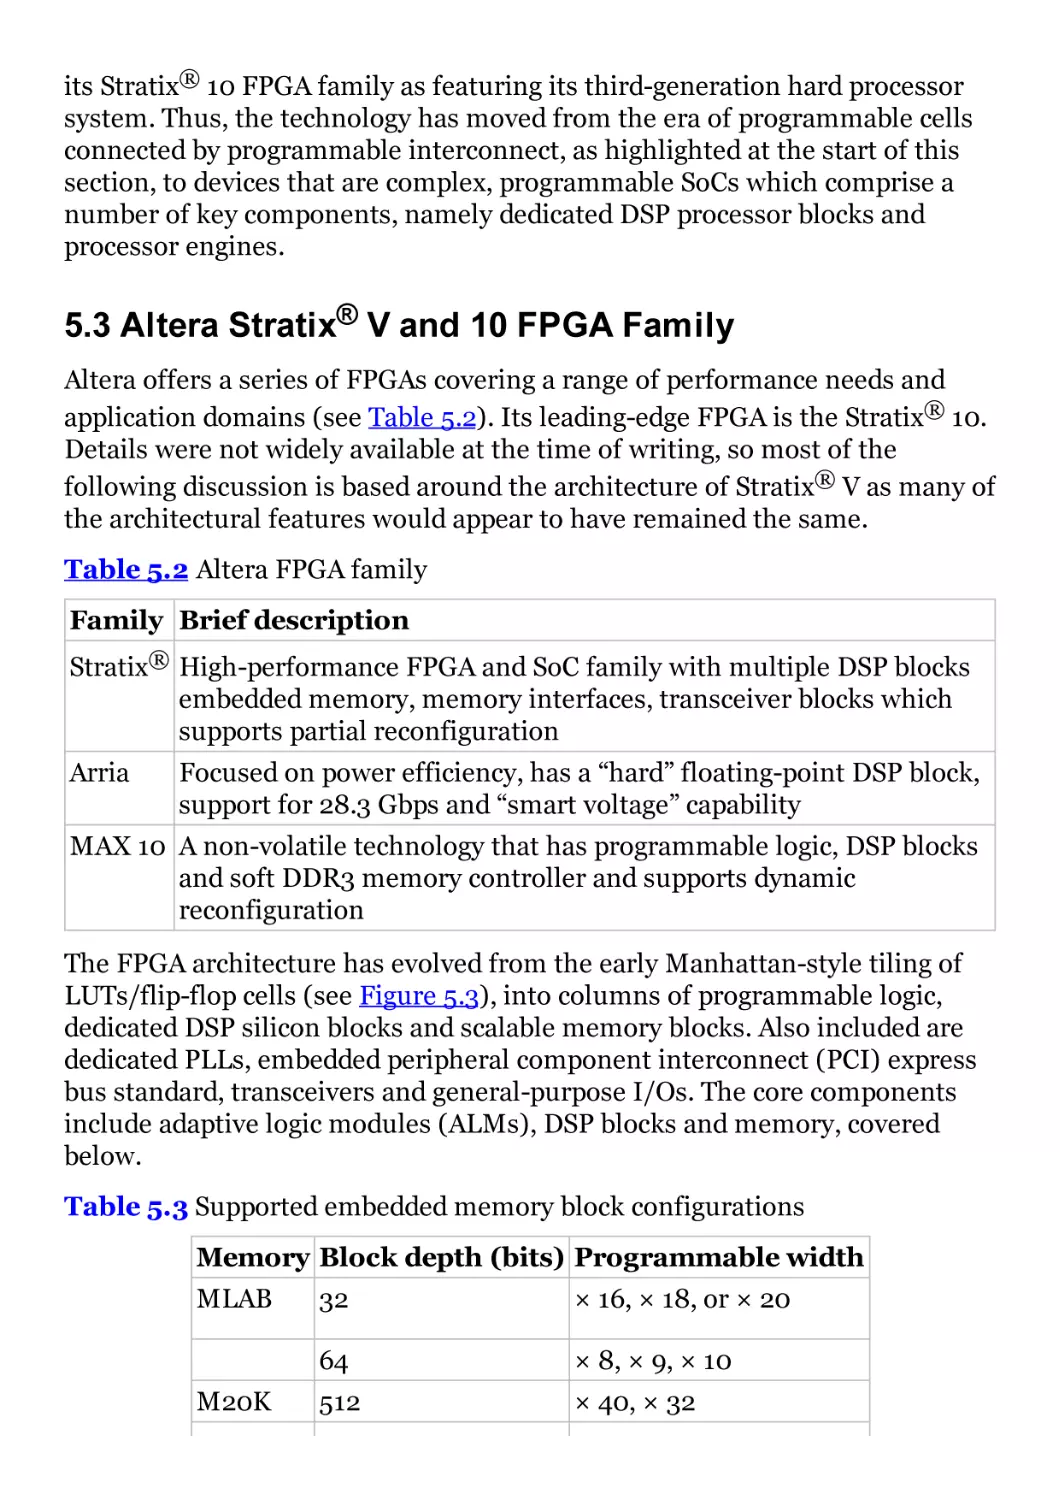 5.3 Altera Stratix® V and 10 FPGA Family